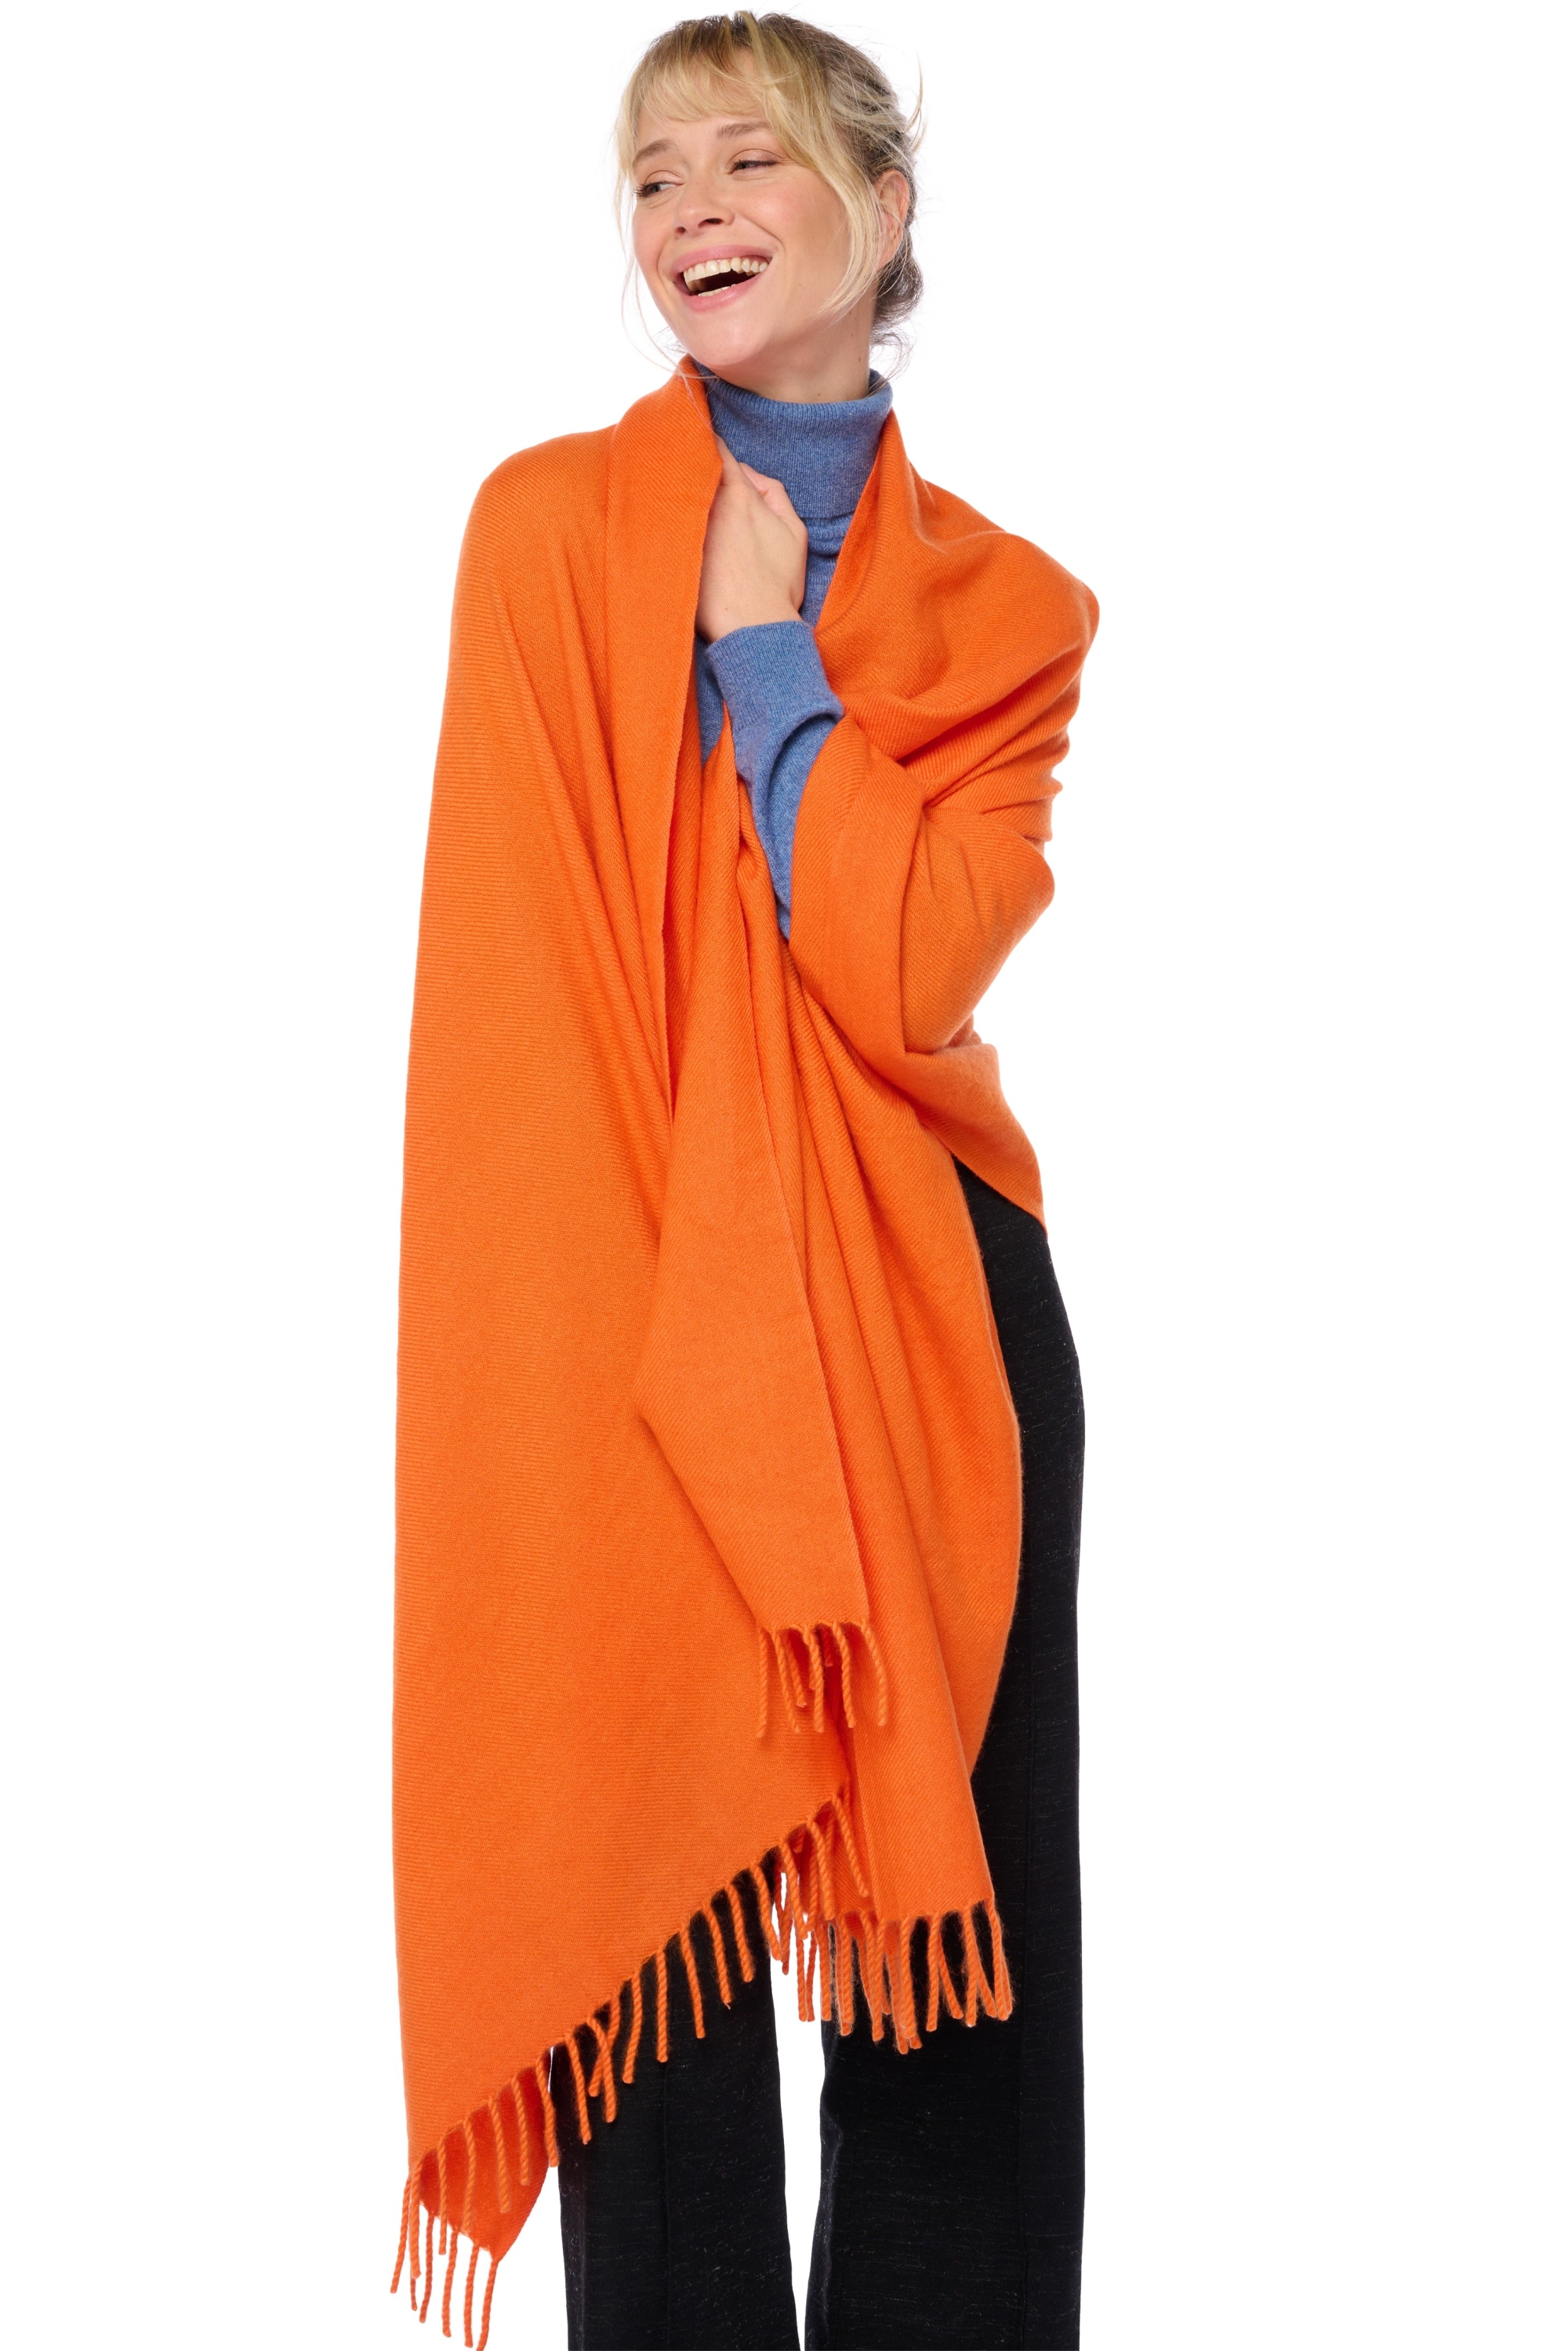 Cashmere accessories niry orange popsicle 200x90cm